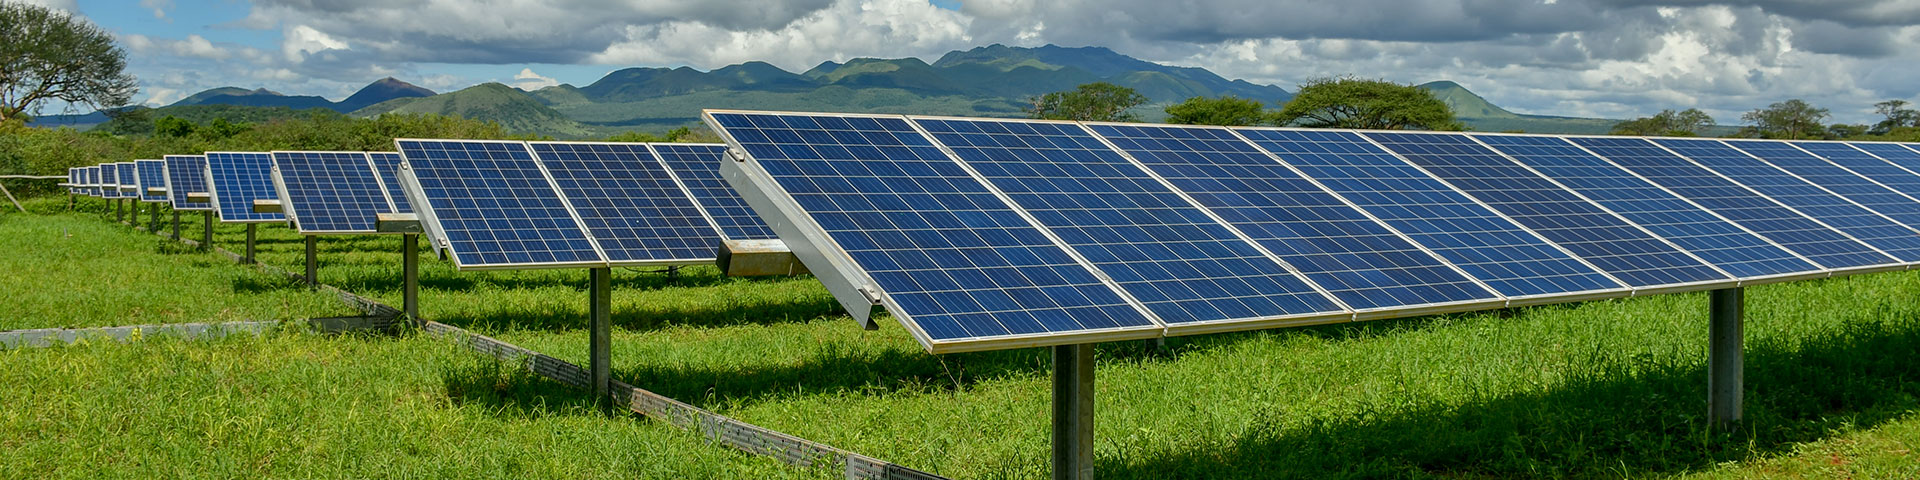 Solar panels on a green field